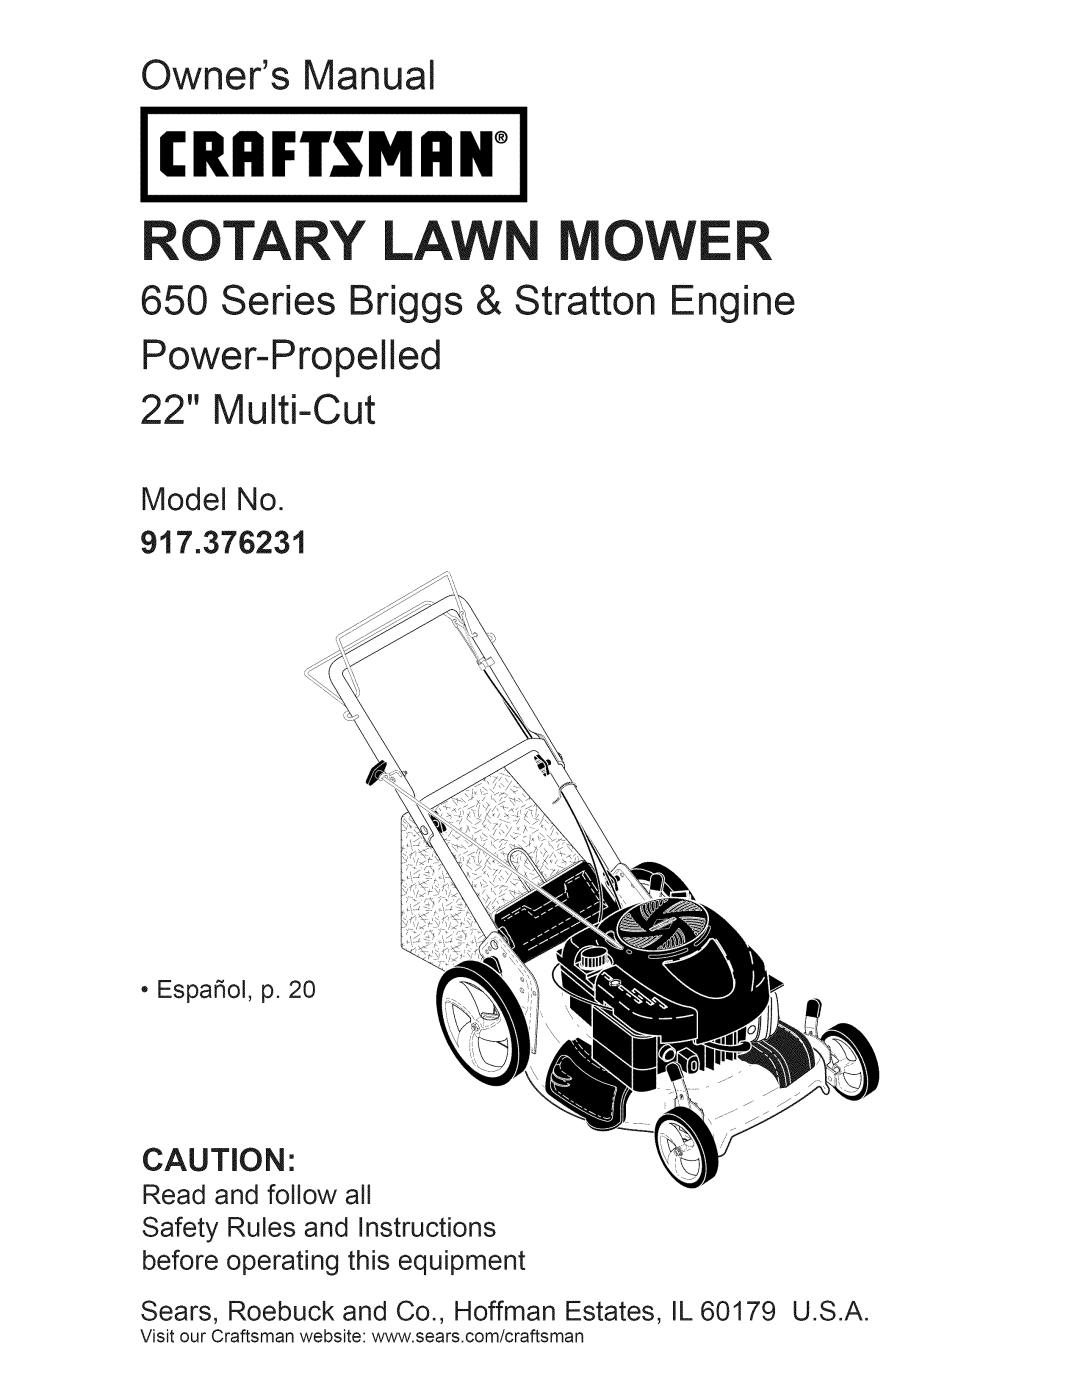 Craftsman owner manual Model No 917.376231, Craftsman, Rotary Lawn Mower, Owners Manual, Power-Propelled 22 Multi-Cut 